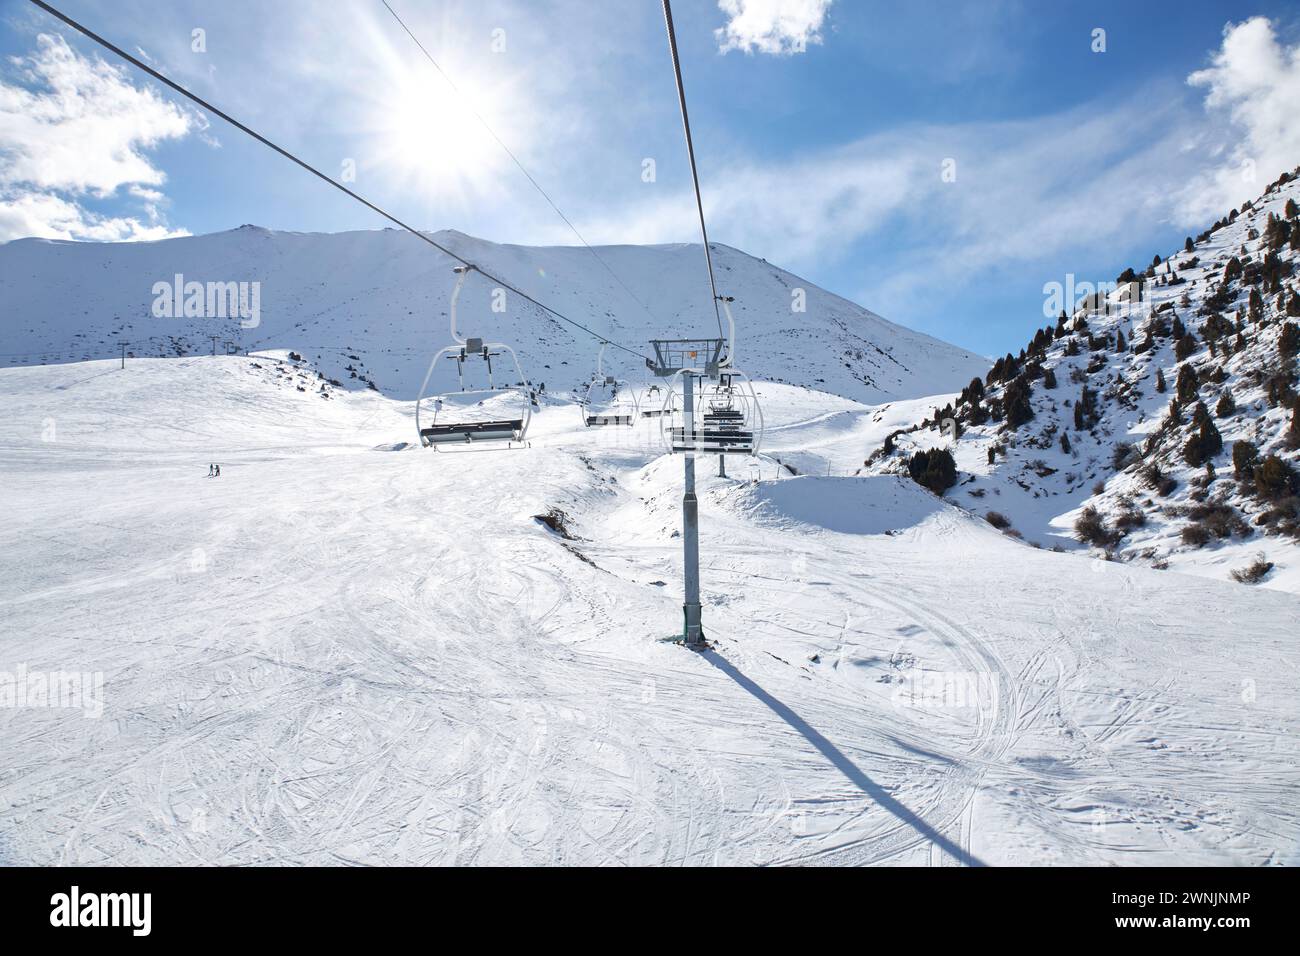 Chunkurchak ski resort in Kyrgyzstan. Empty ski lift seats. Mountain slope at sunny winter day, blue sky. Active recreation skiing and snowboarding. S Stock Photo